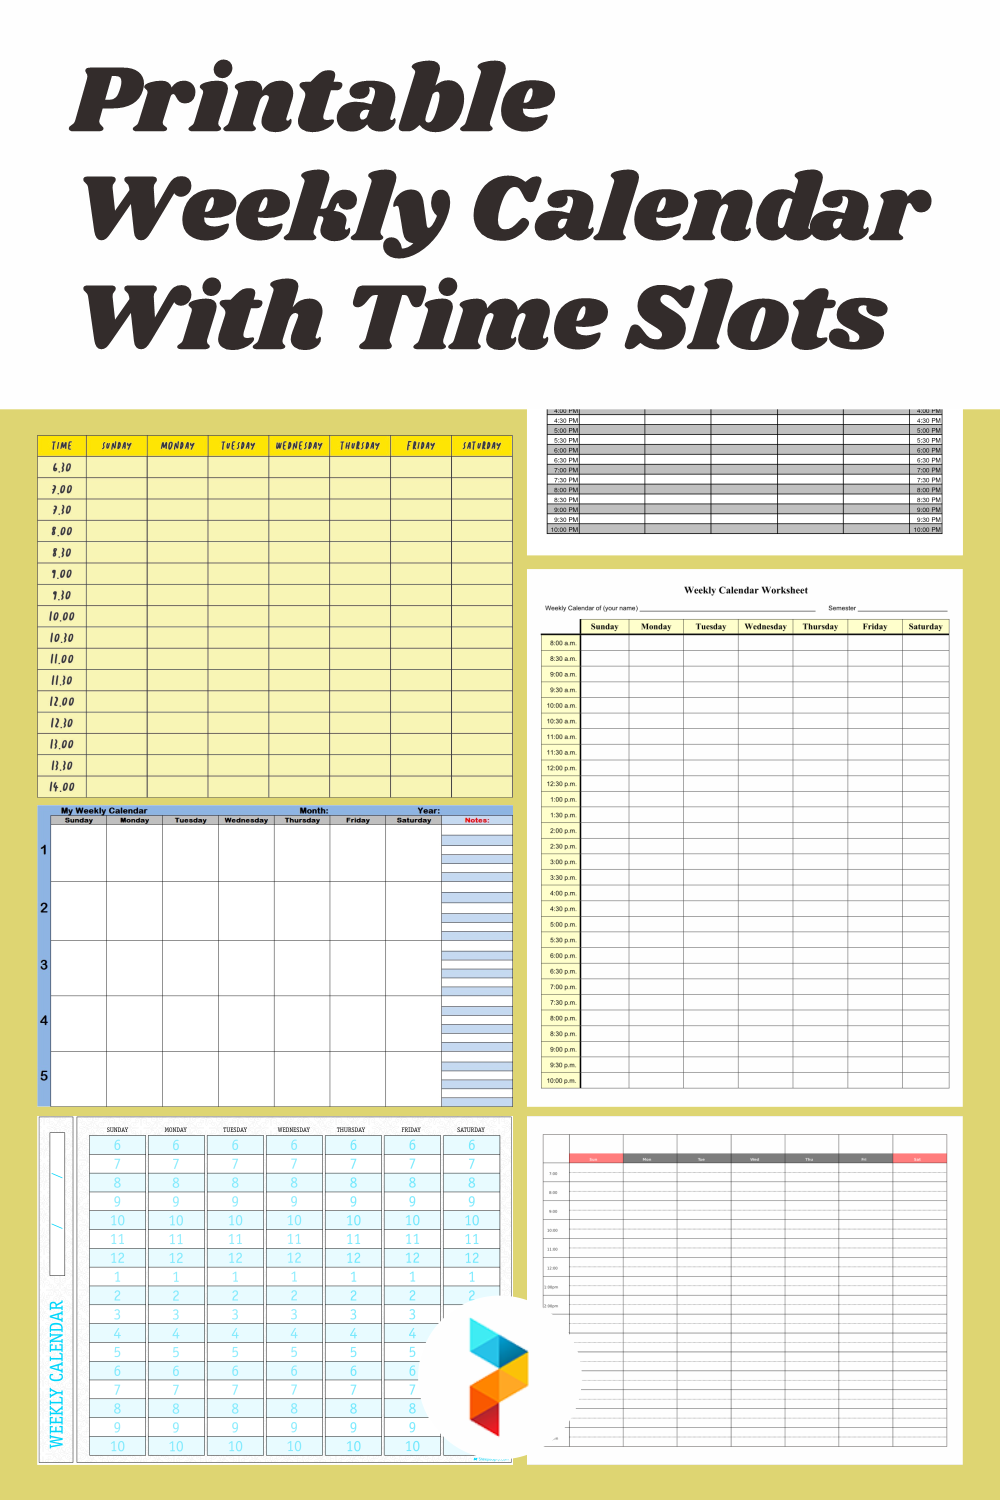 Printable Weekly Calendar With Time Slots